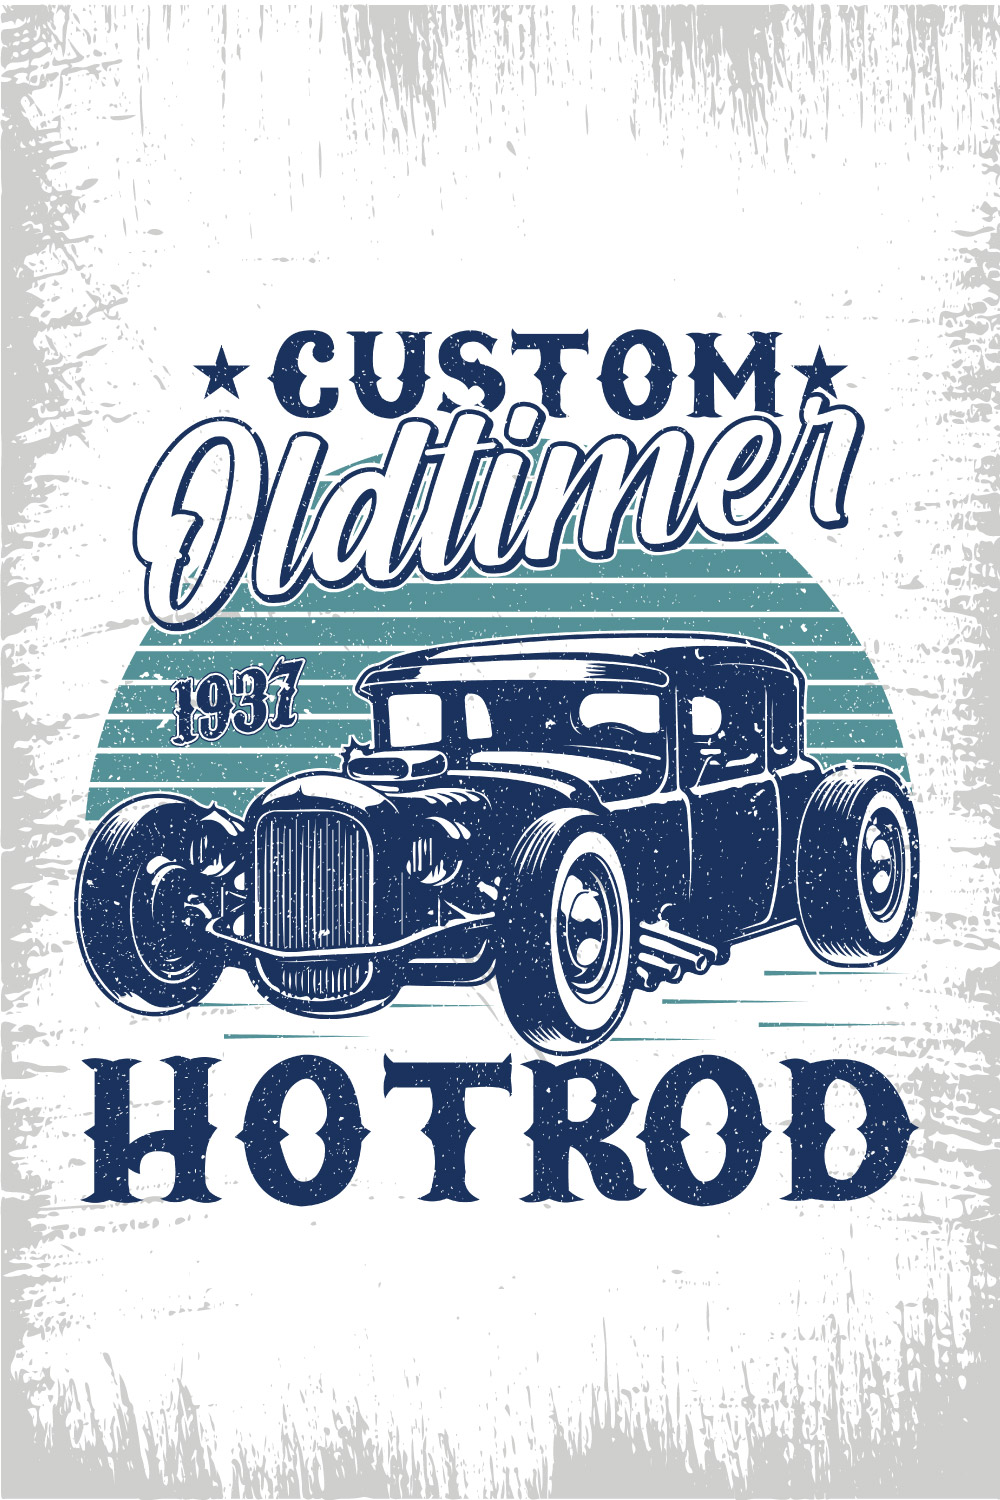 Custom oldtimer 1937 hotrod - hot rod t shirt design pinterest preview image.